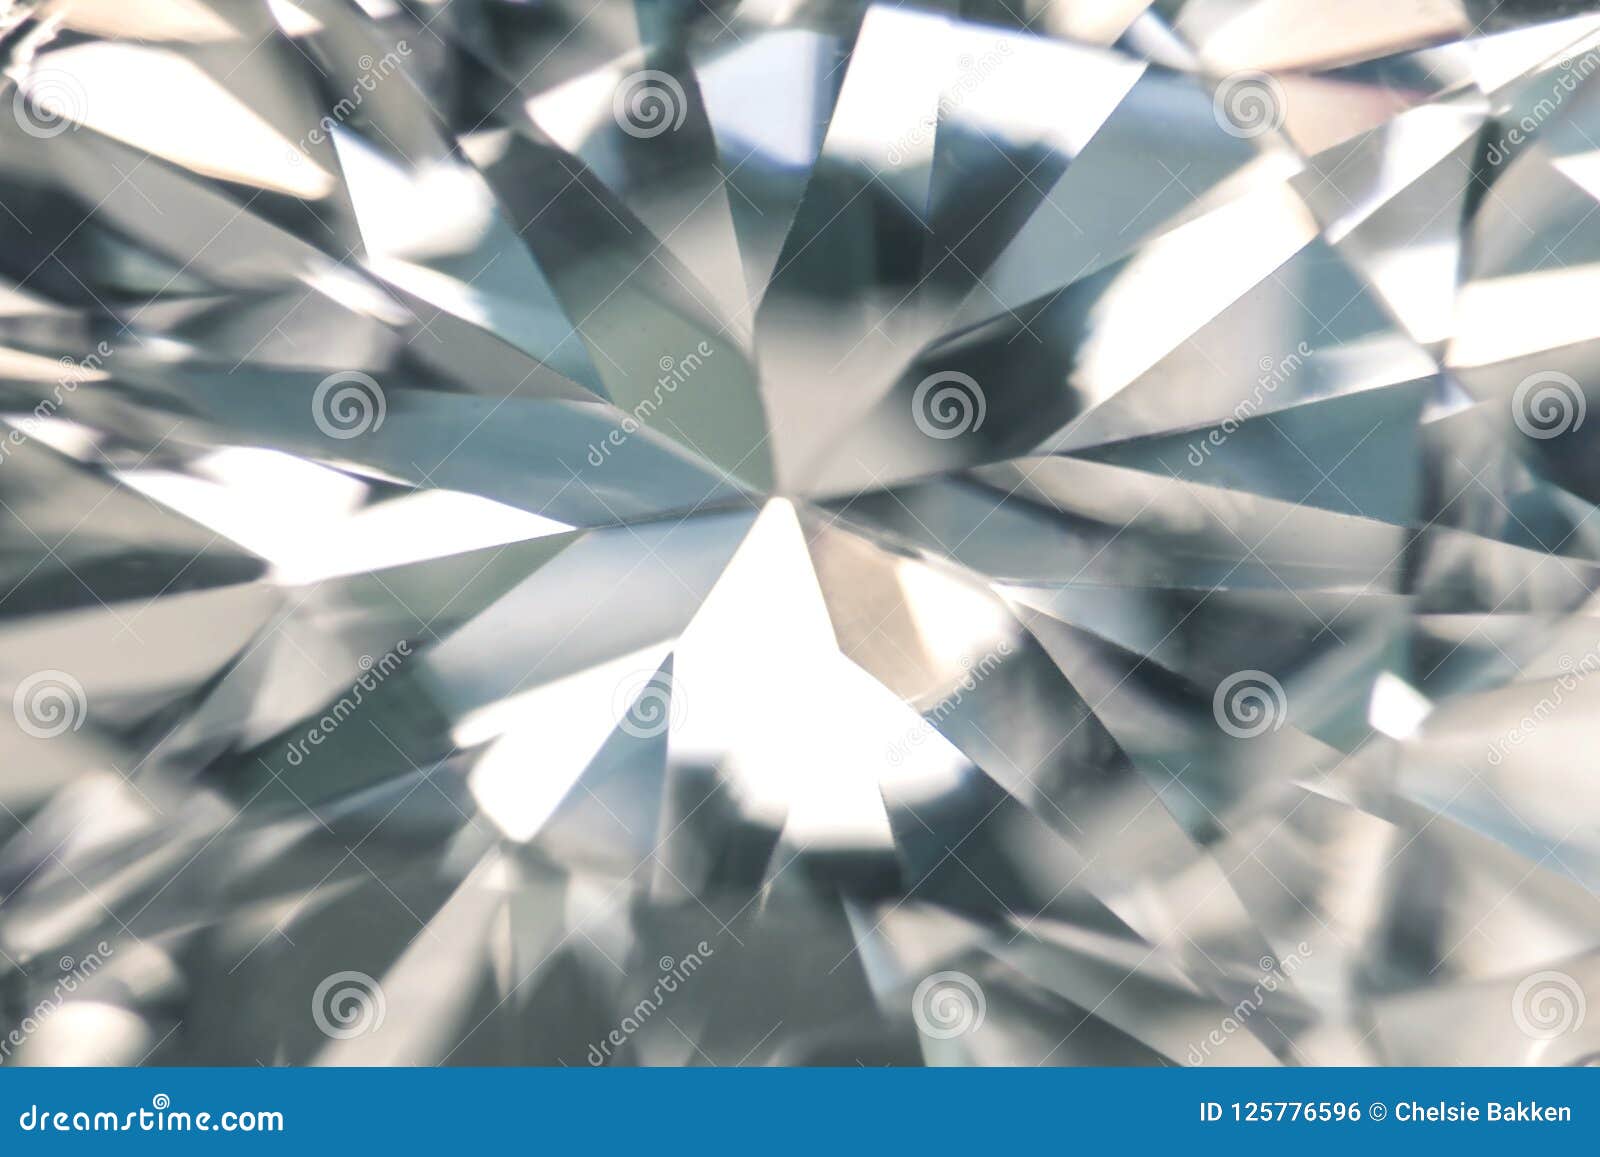 abstract diamond gemstone jewelry background